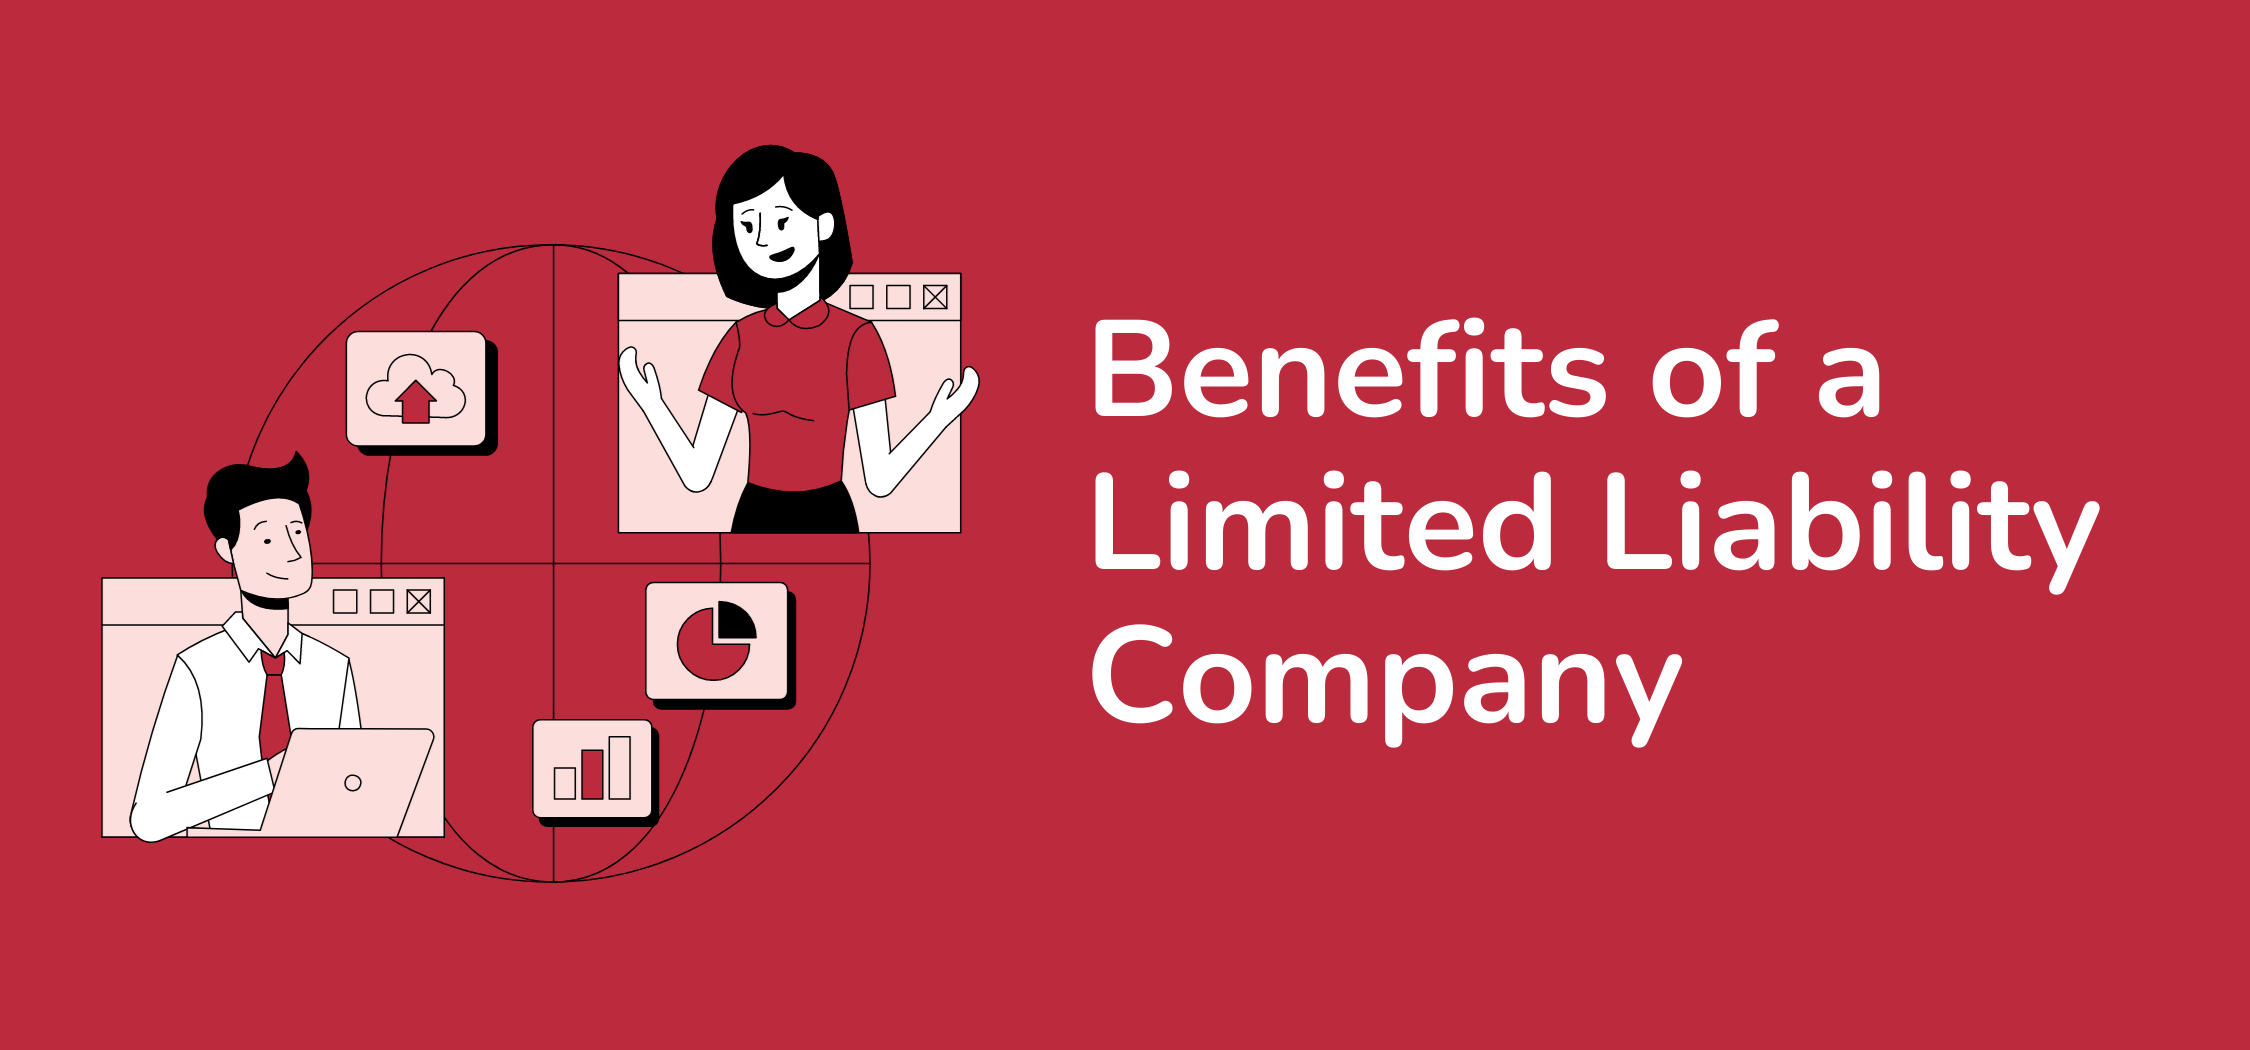 Benefits of a Limited Liability Company (LLC)